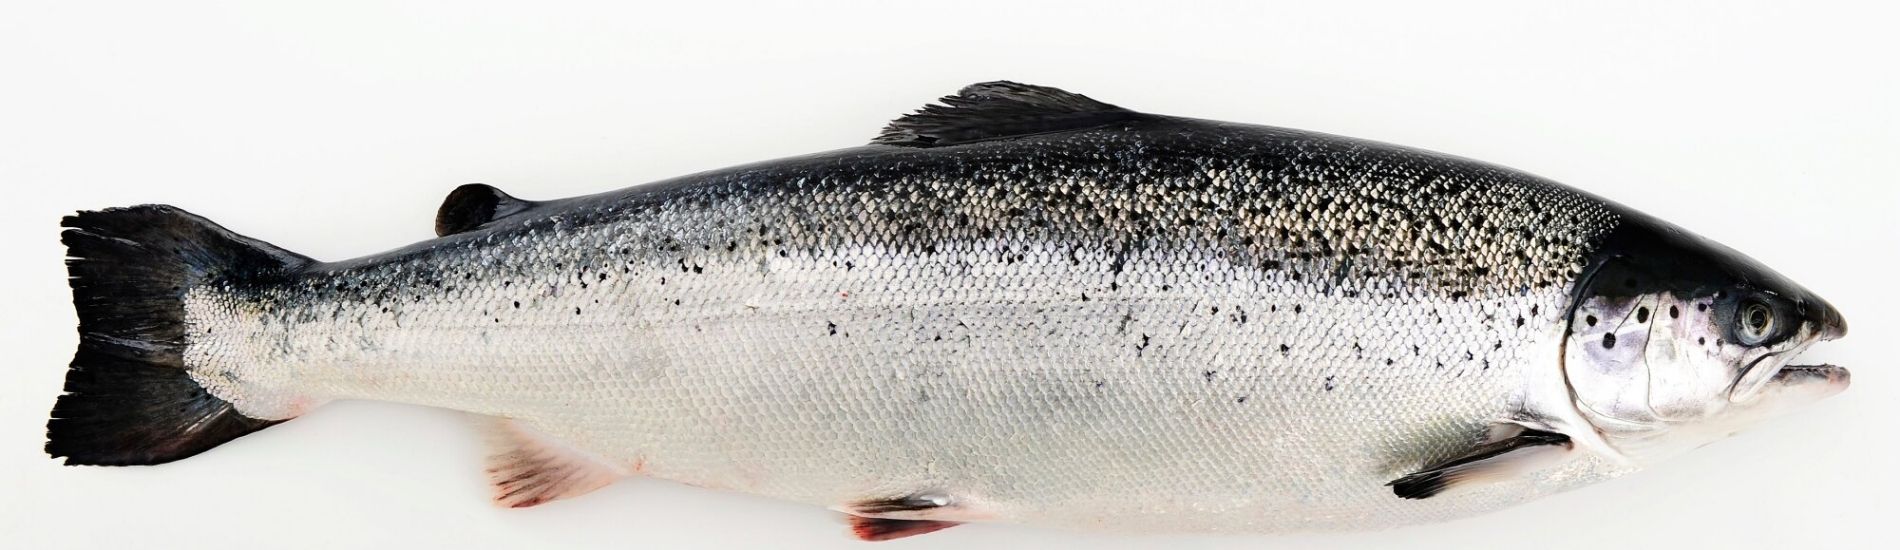 Norwegian Salmon as the World's Most Popular Fish